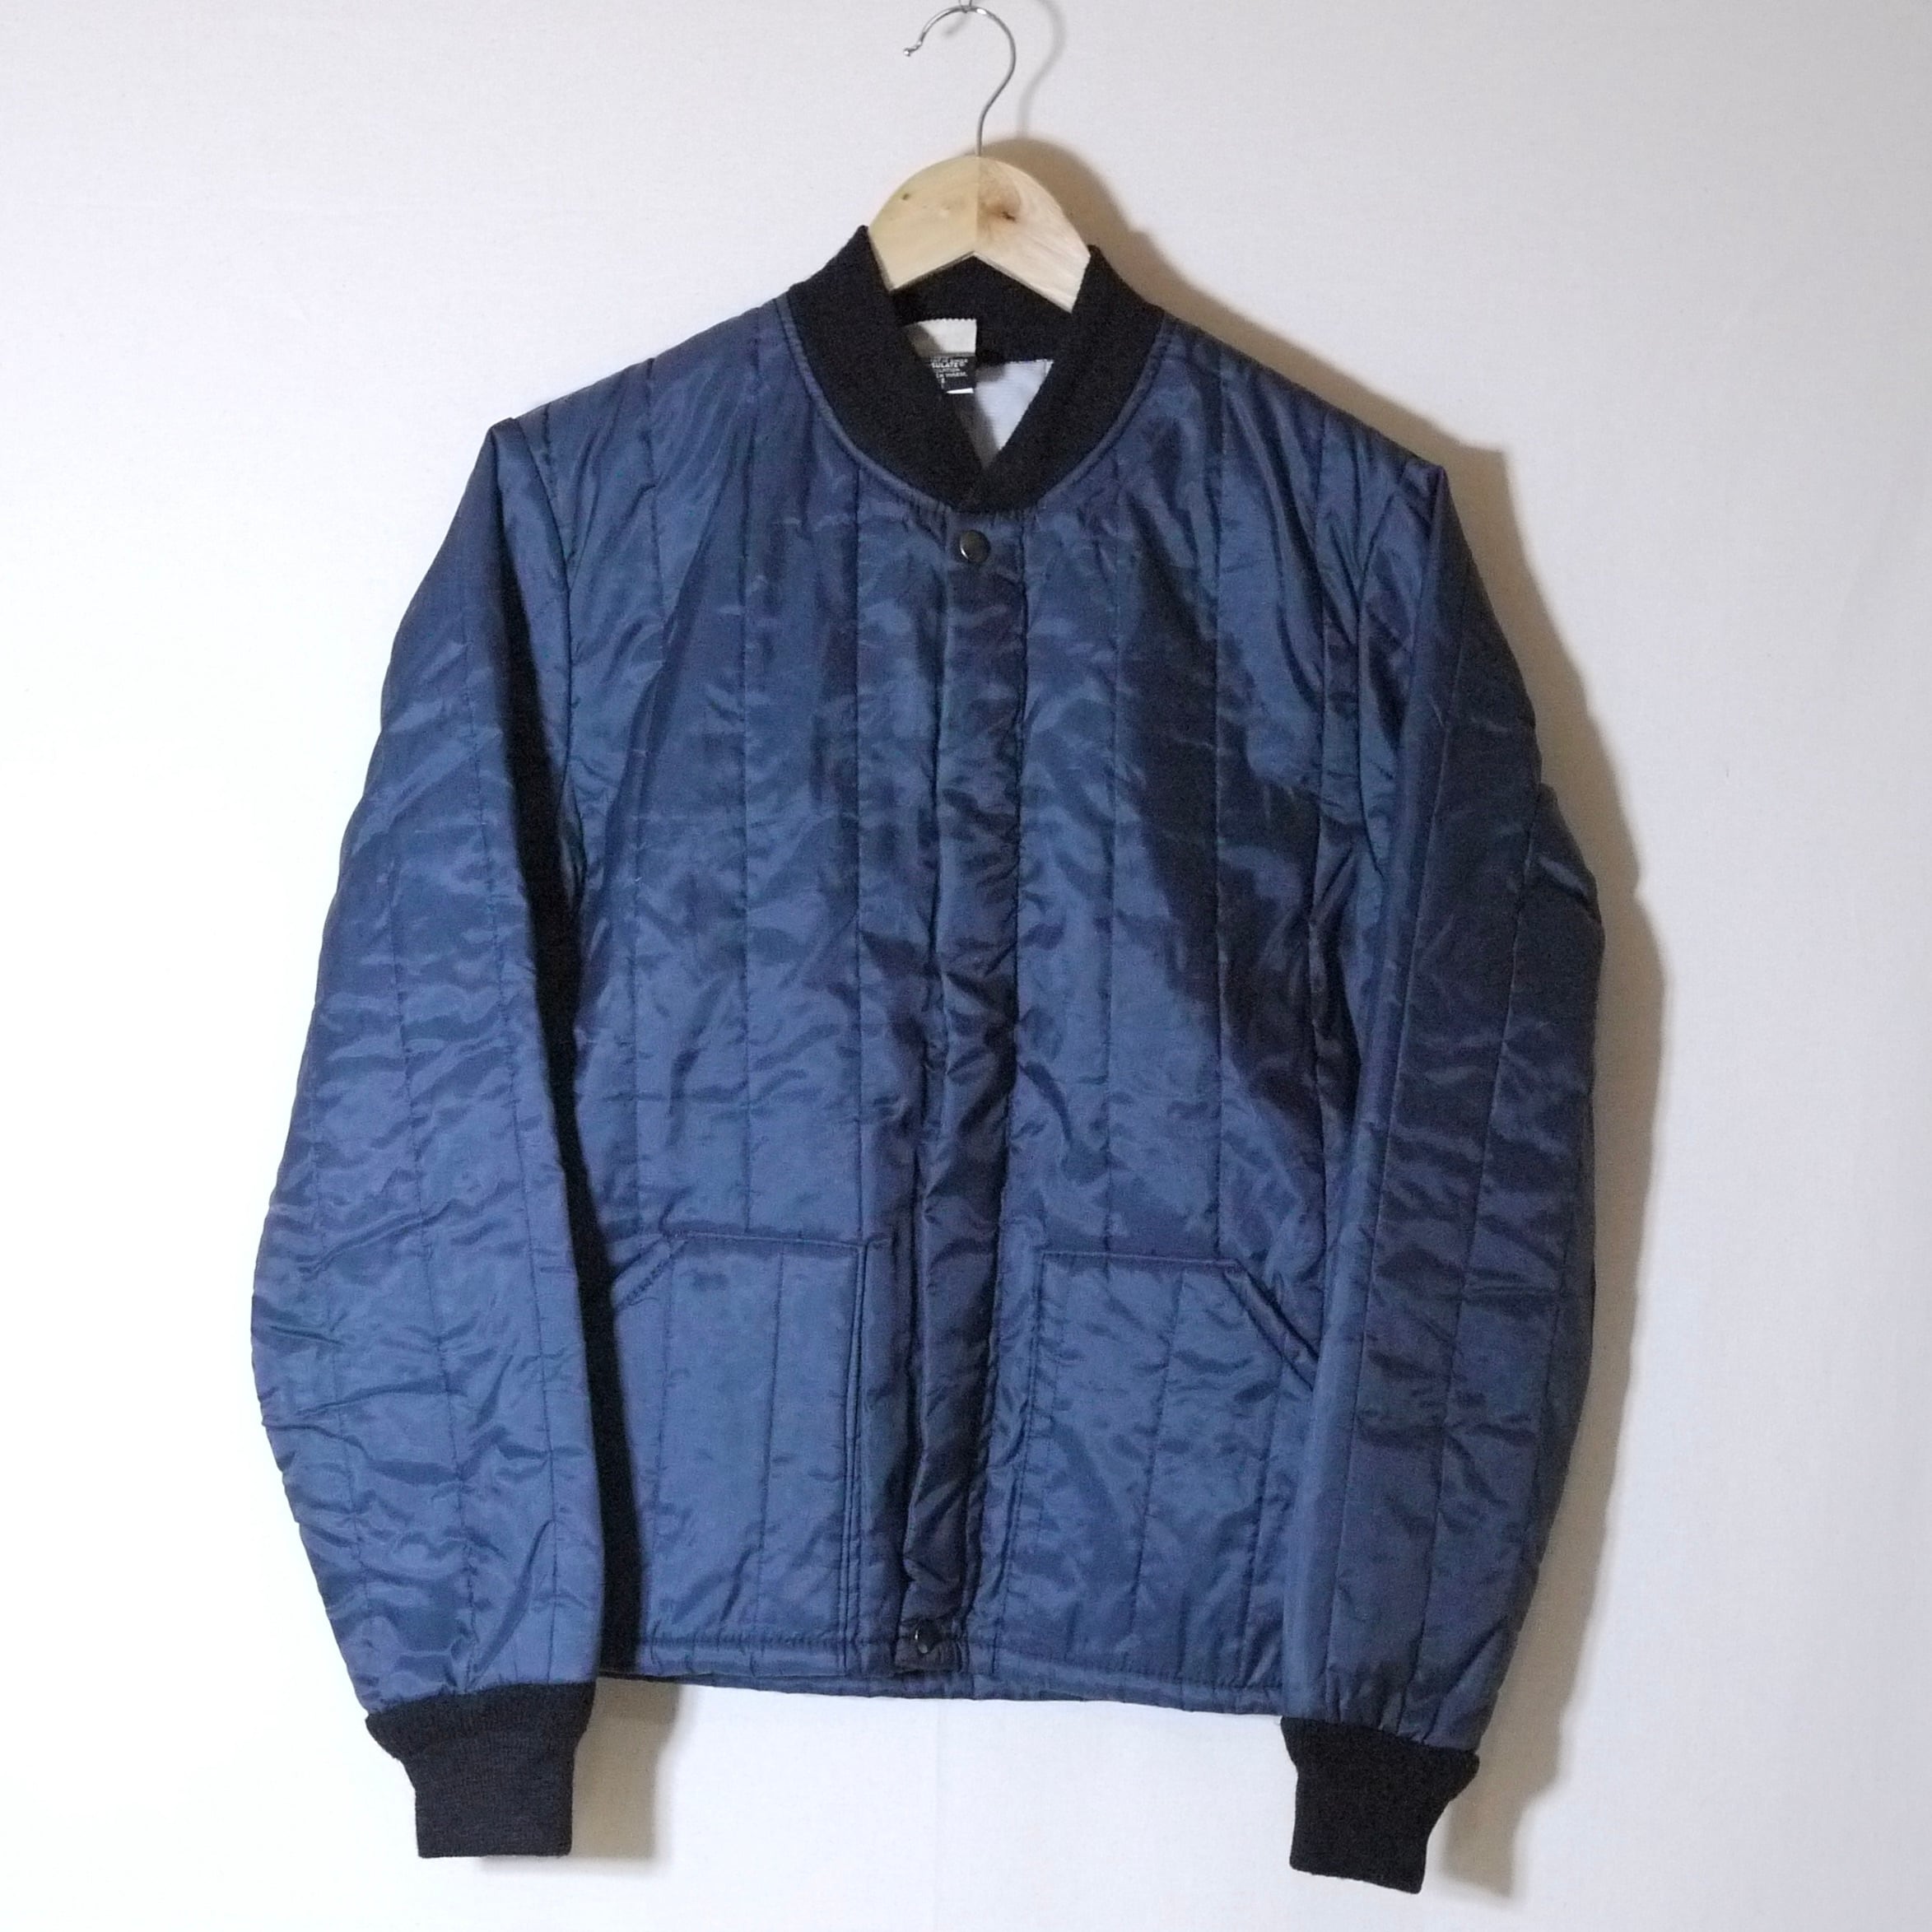 ENFOLD】Quilting jacket - holiday - ノーカラージャケット